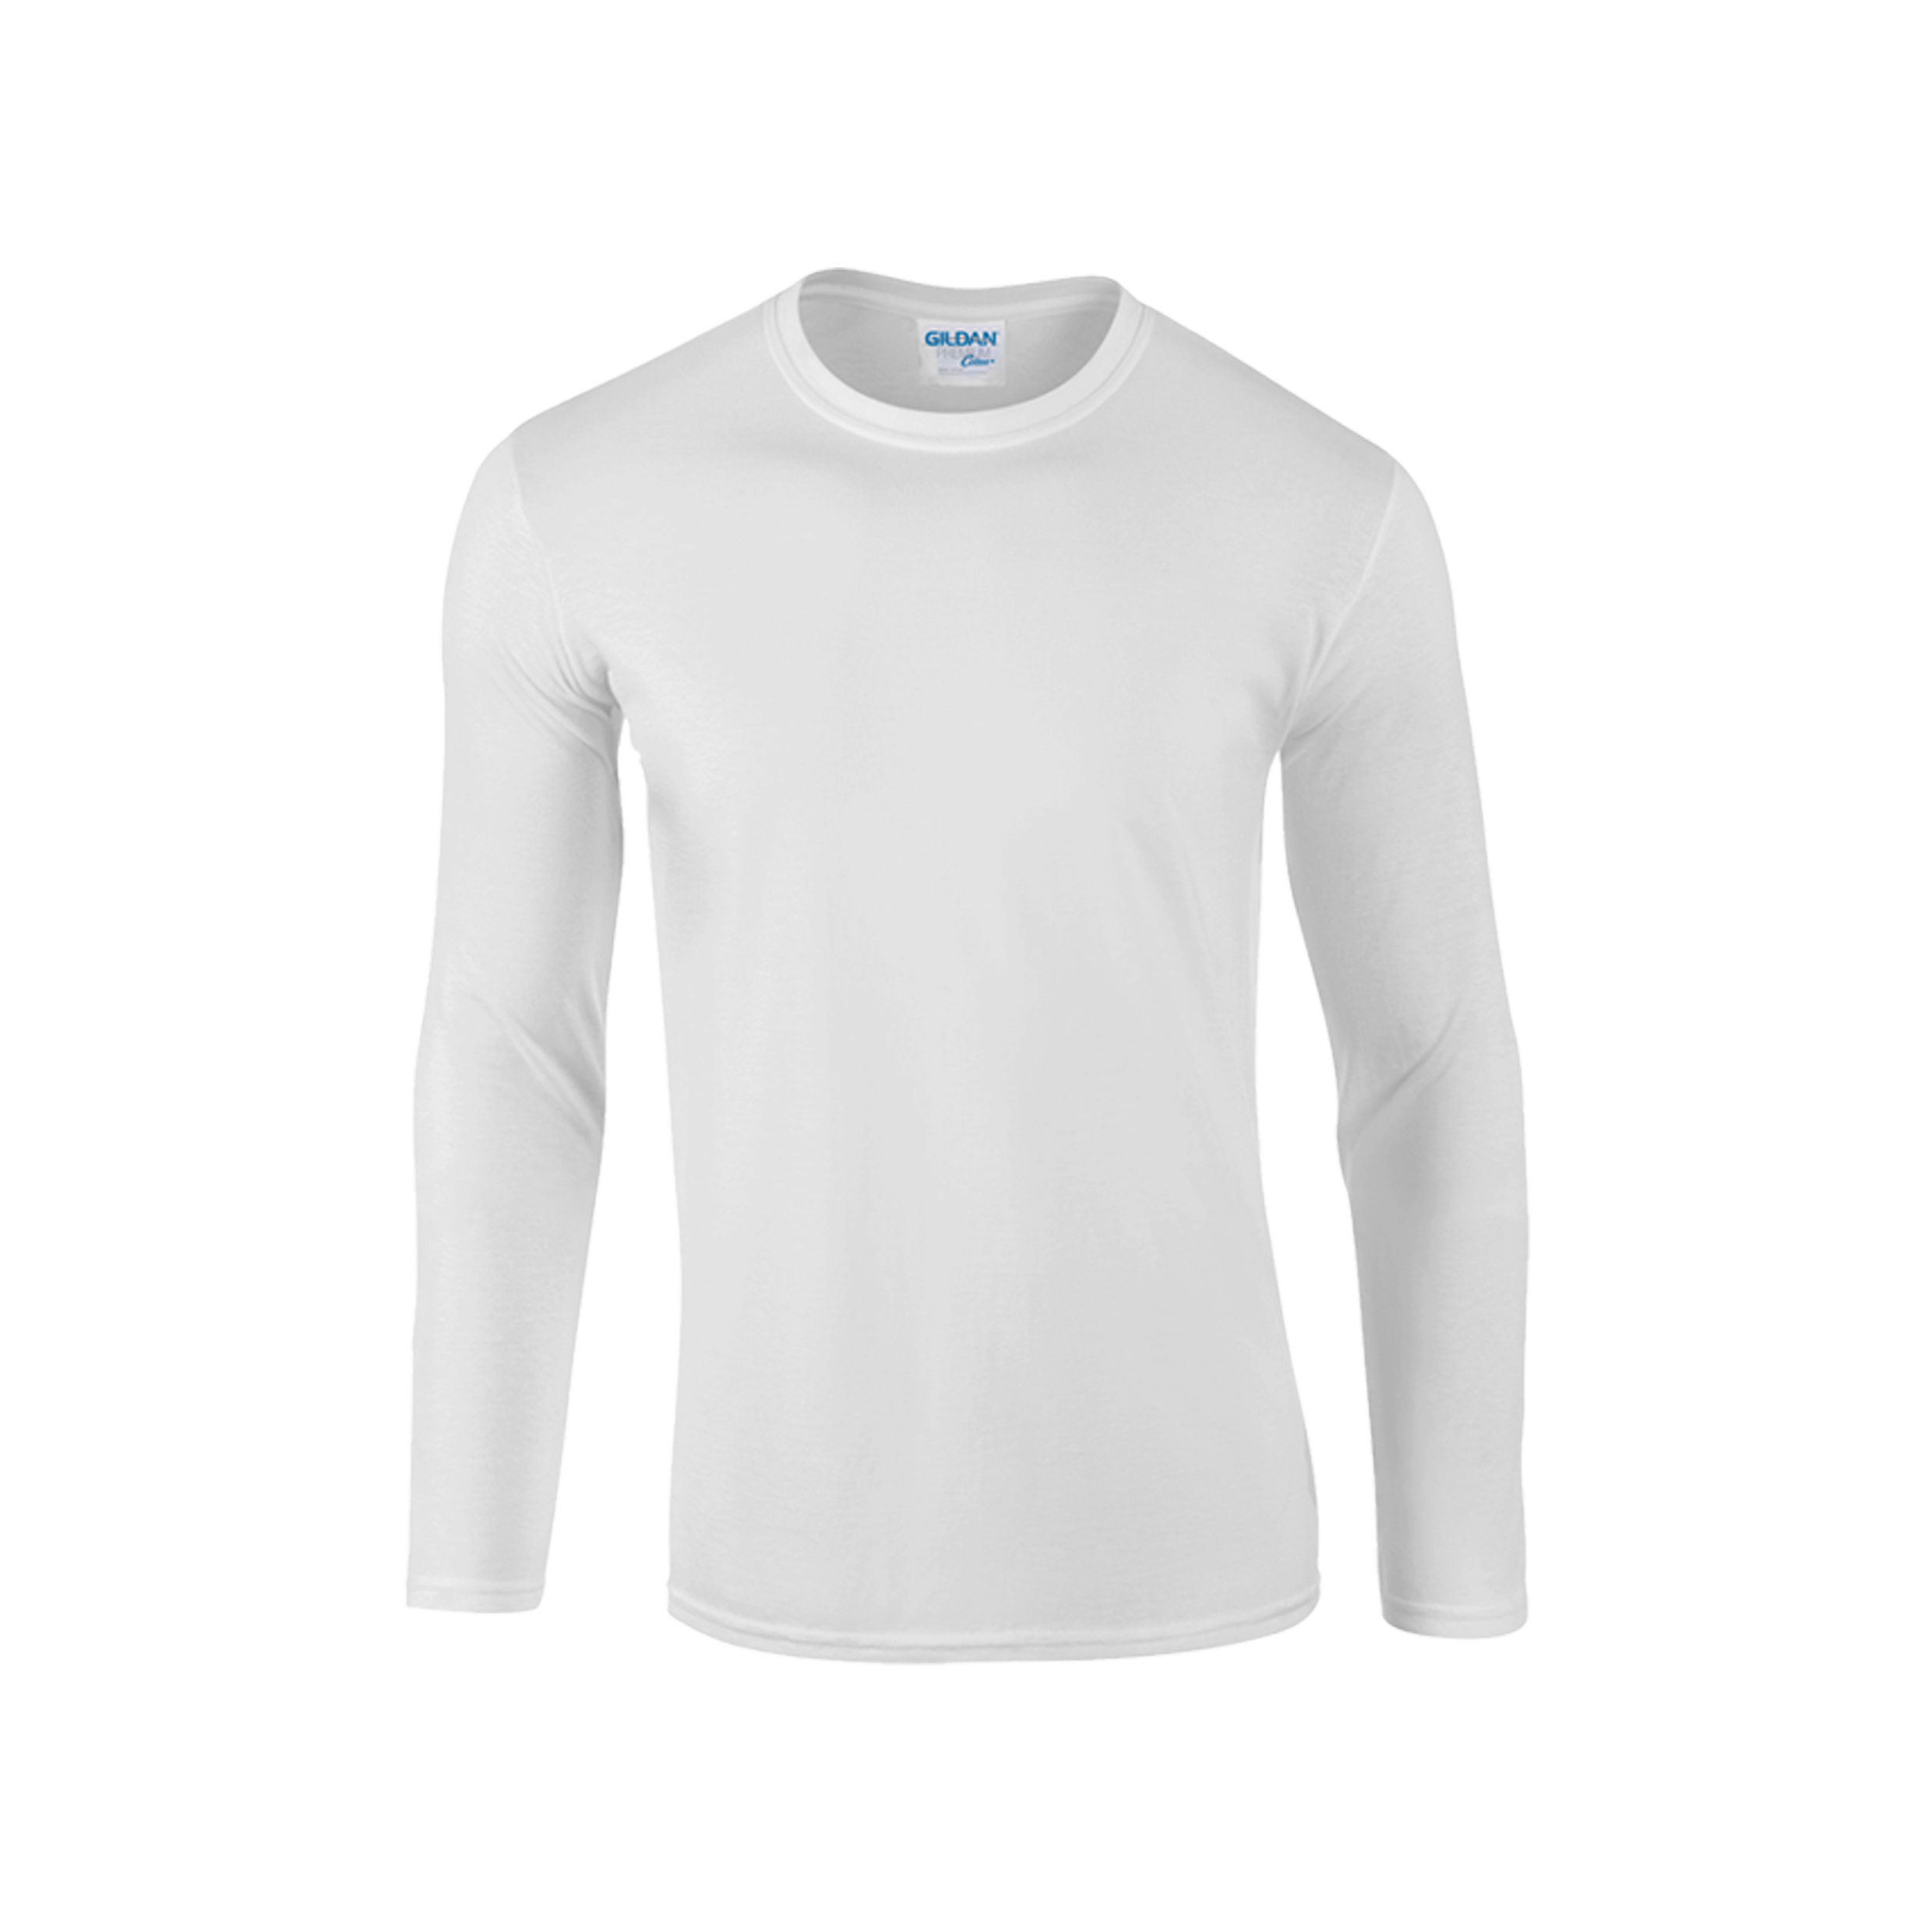 Download Gildan Premium Cotton Adult Long Sleeve T-Shirt 76400 180g ...